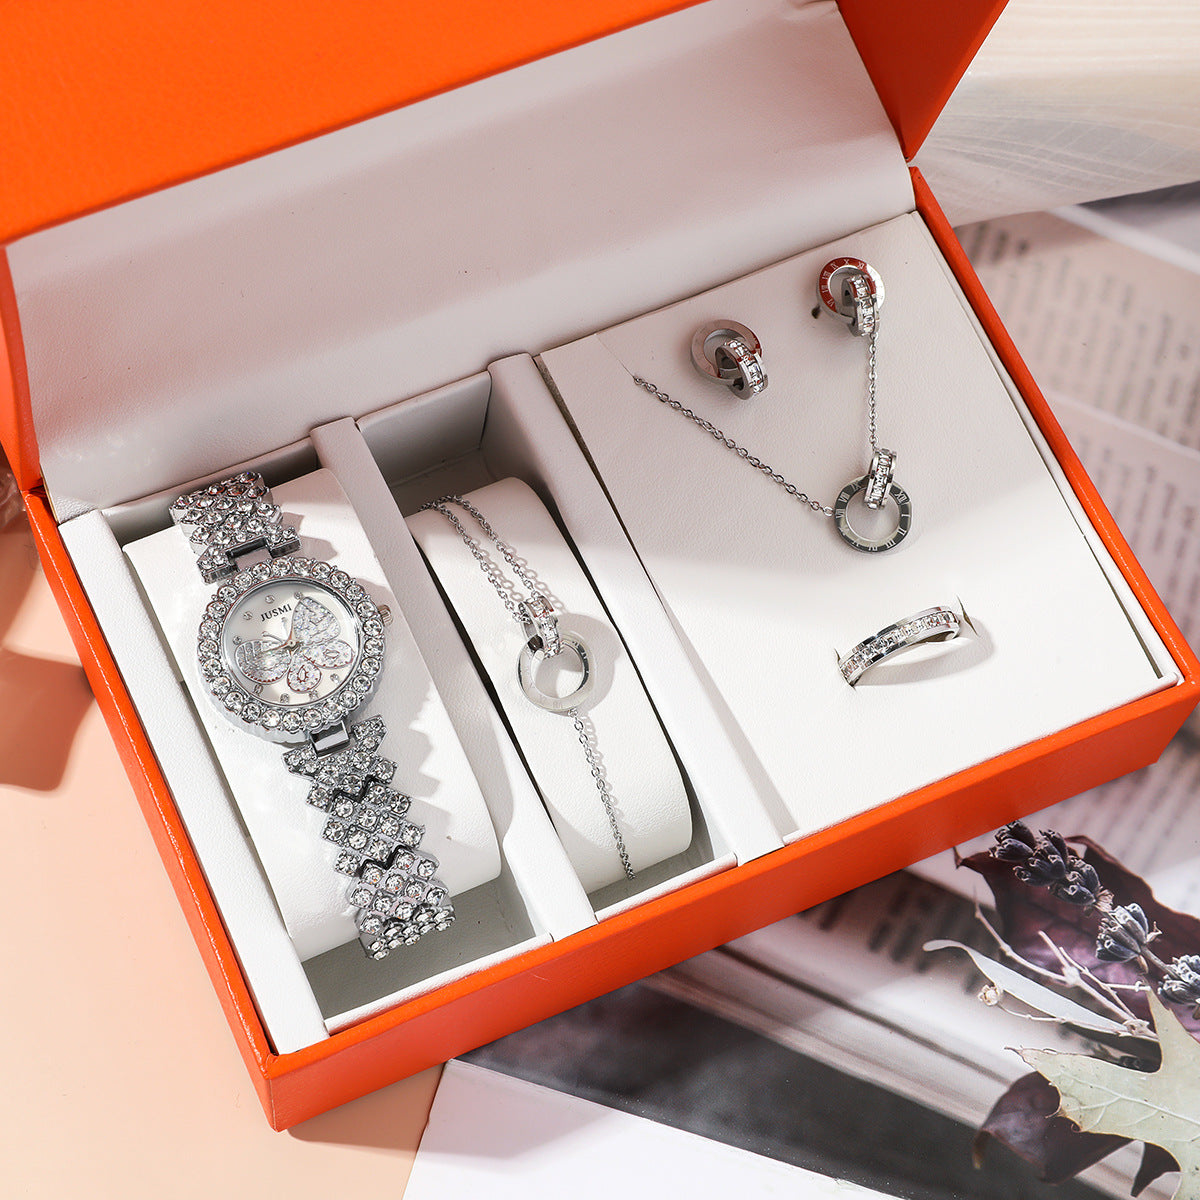 Fashion Wristwatch Women Ring Necklace Earring Bracelets Jewelry Gift Set For Ladies